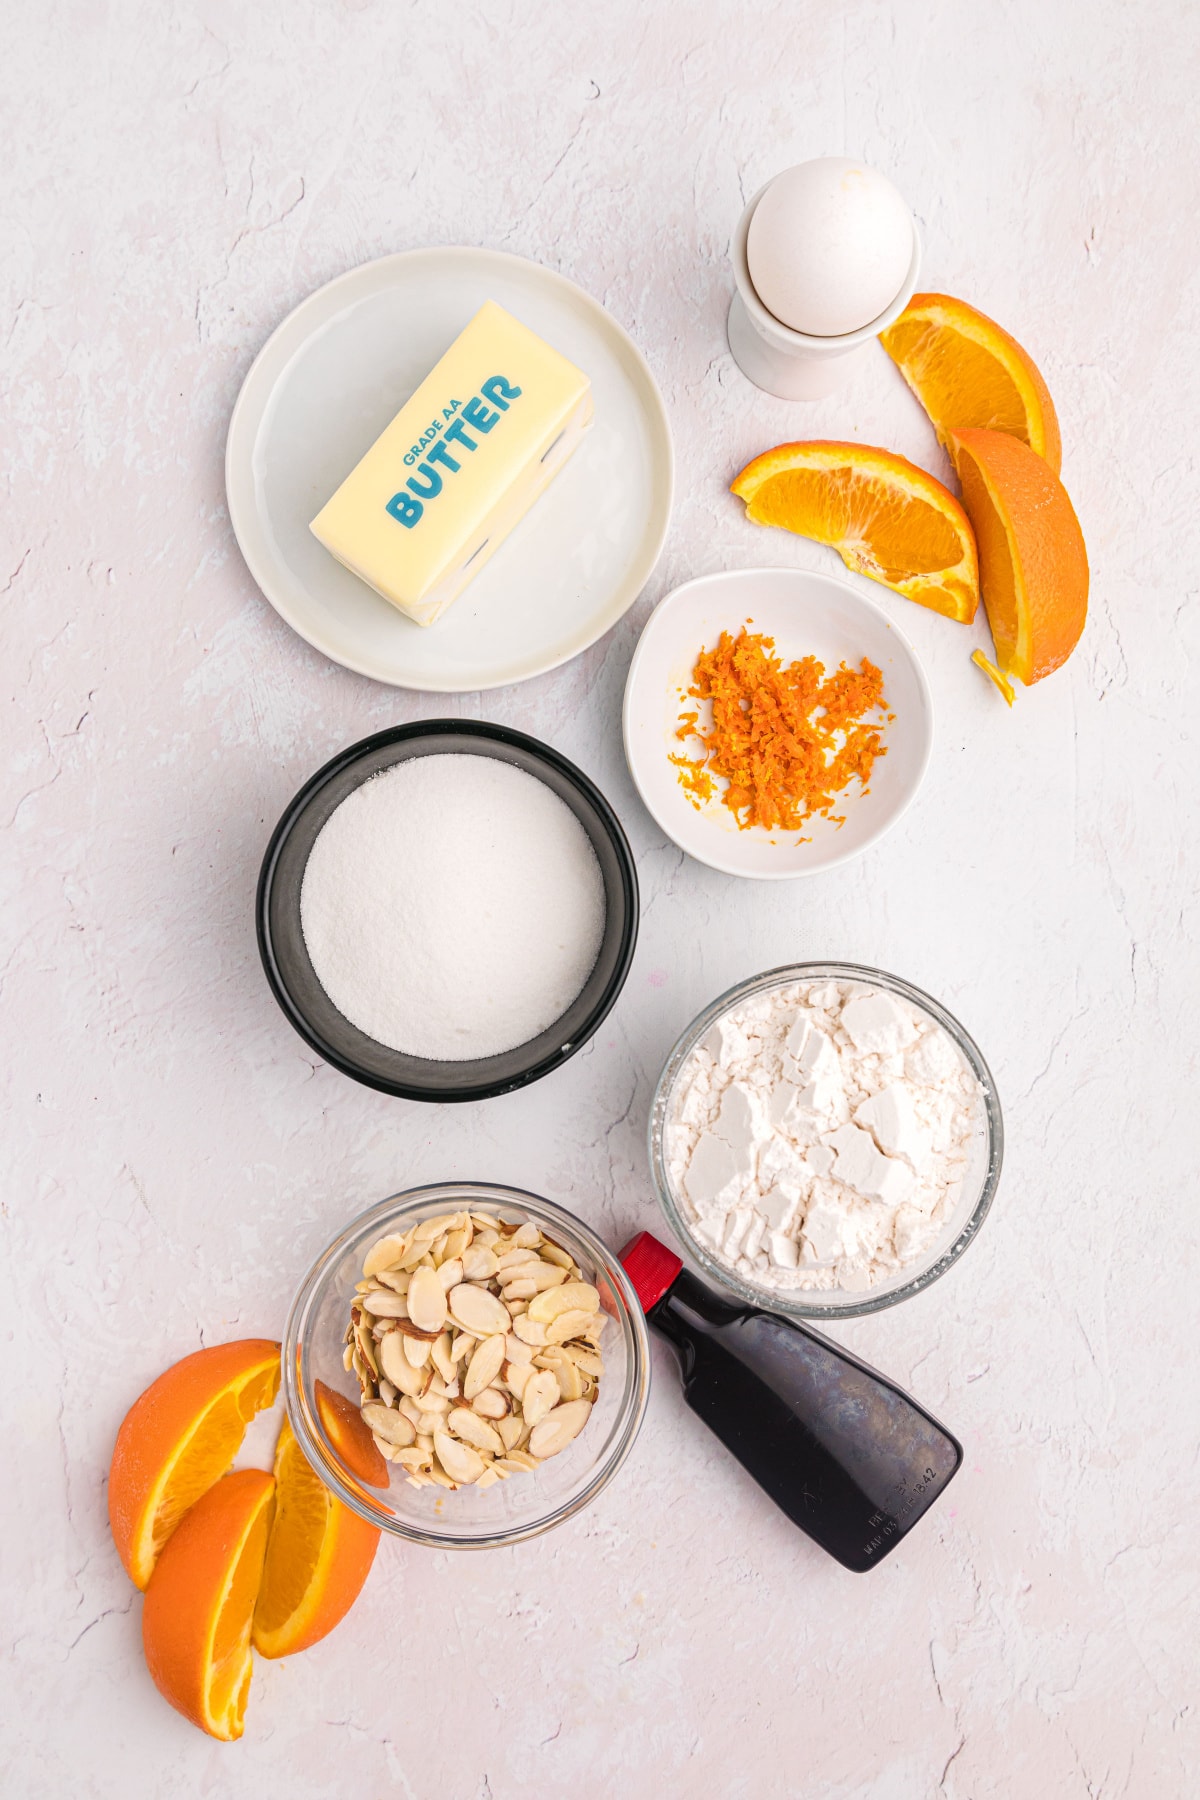 ingredients displayed for making almond orange wafers